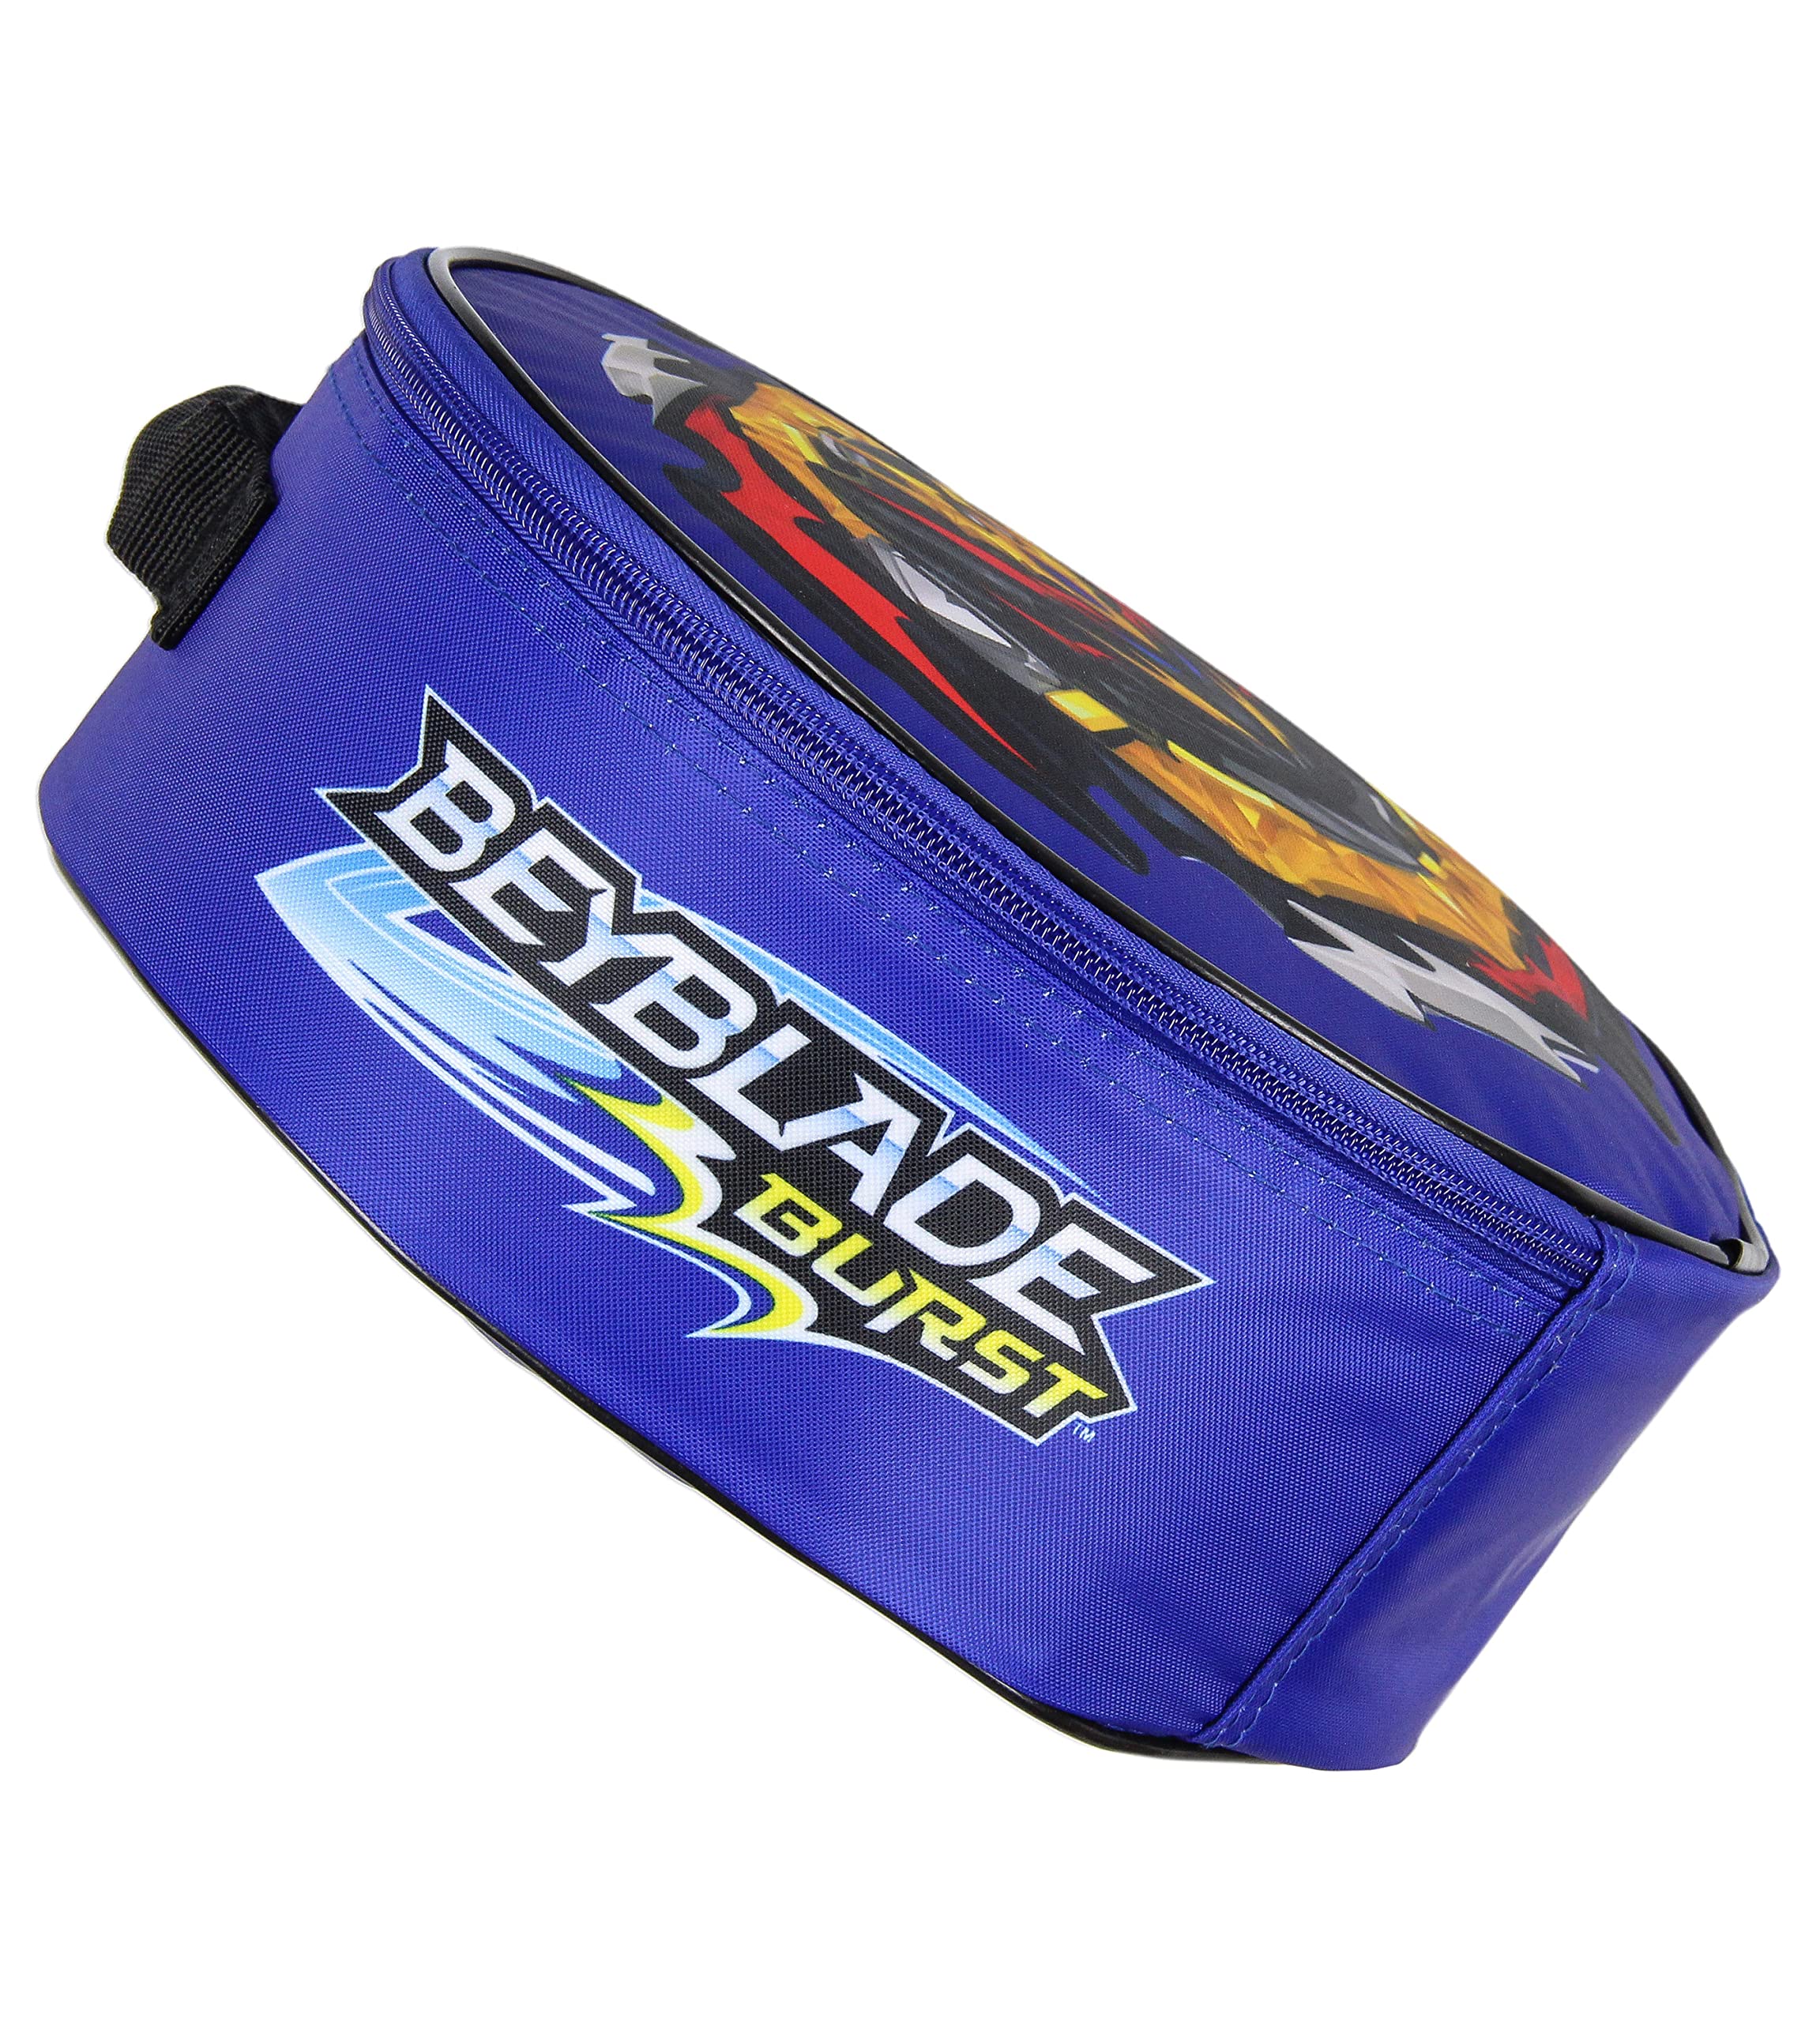 Beyblade Burst Show Bel Daizora Dynamite Belial Nexus Venture-2 Blade Character Single Compartment Lunch Box Bag